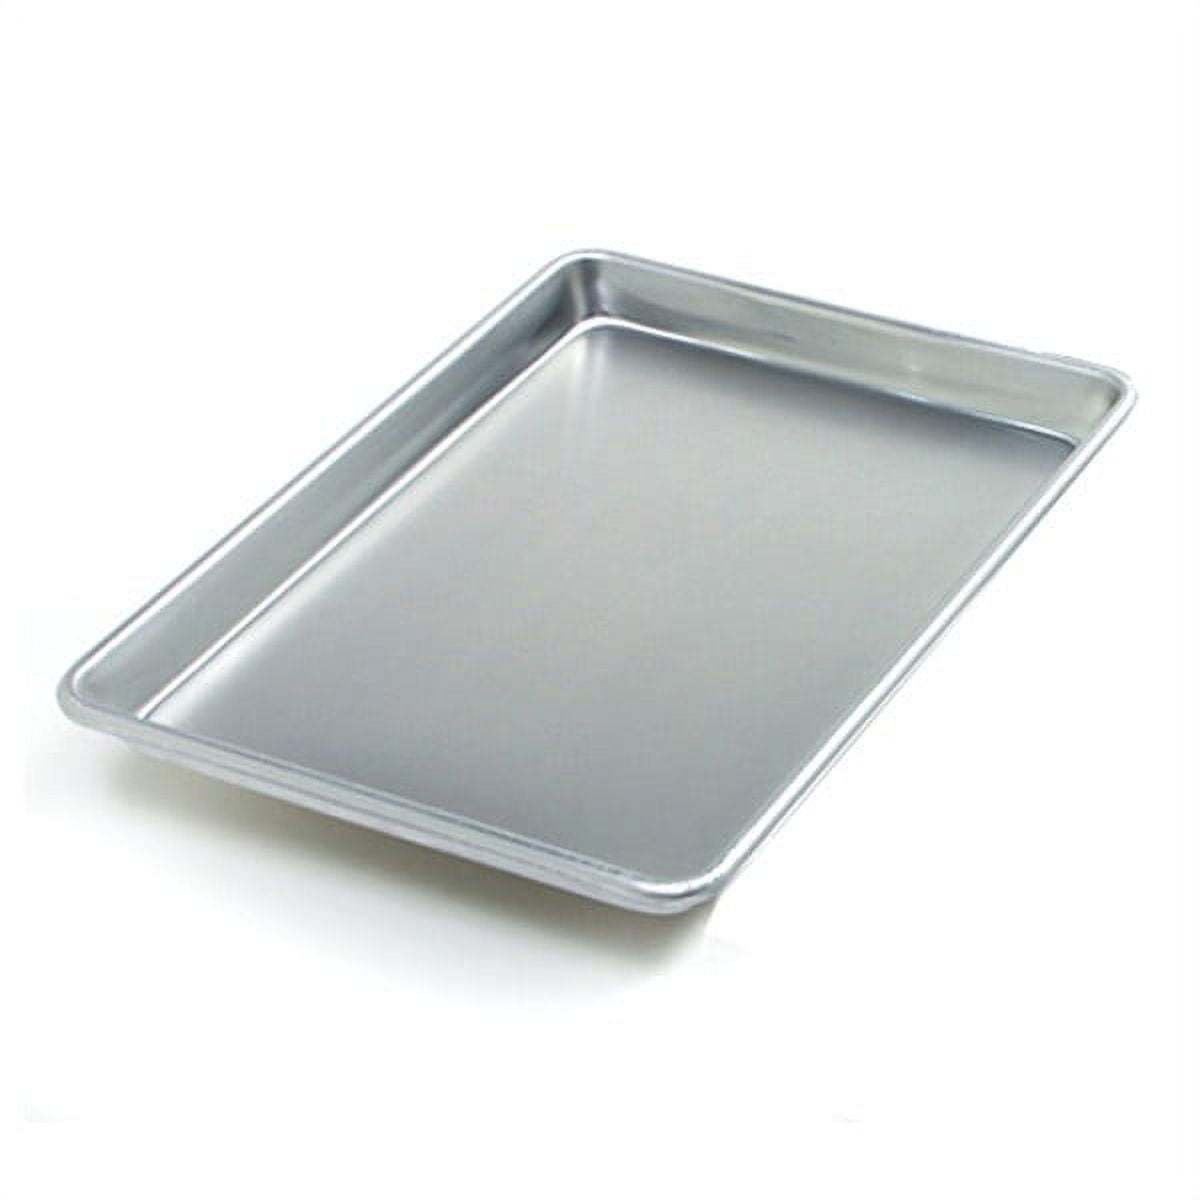 Small Aluminum Baking Sheet 13 x 9.5 and Cover » NUCU® Cookware